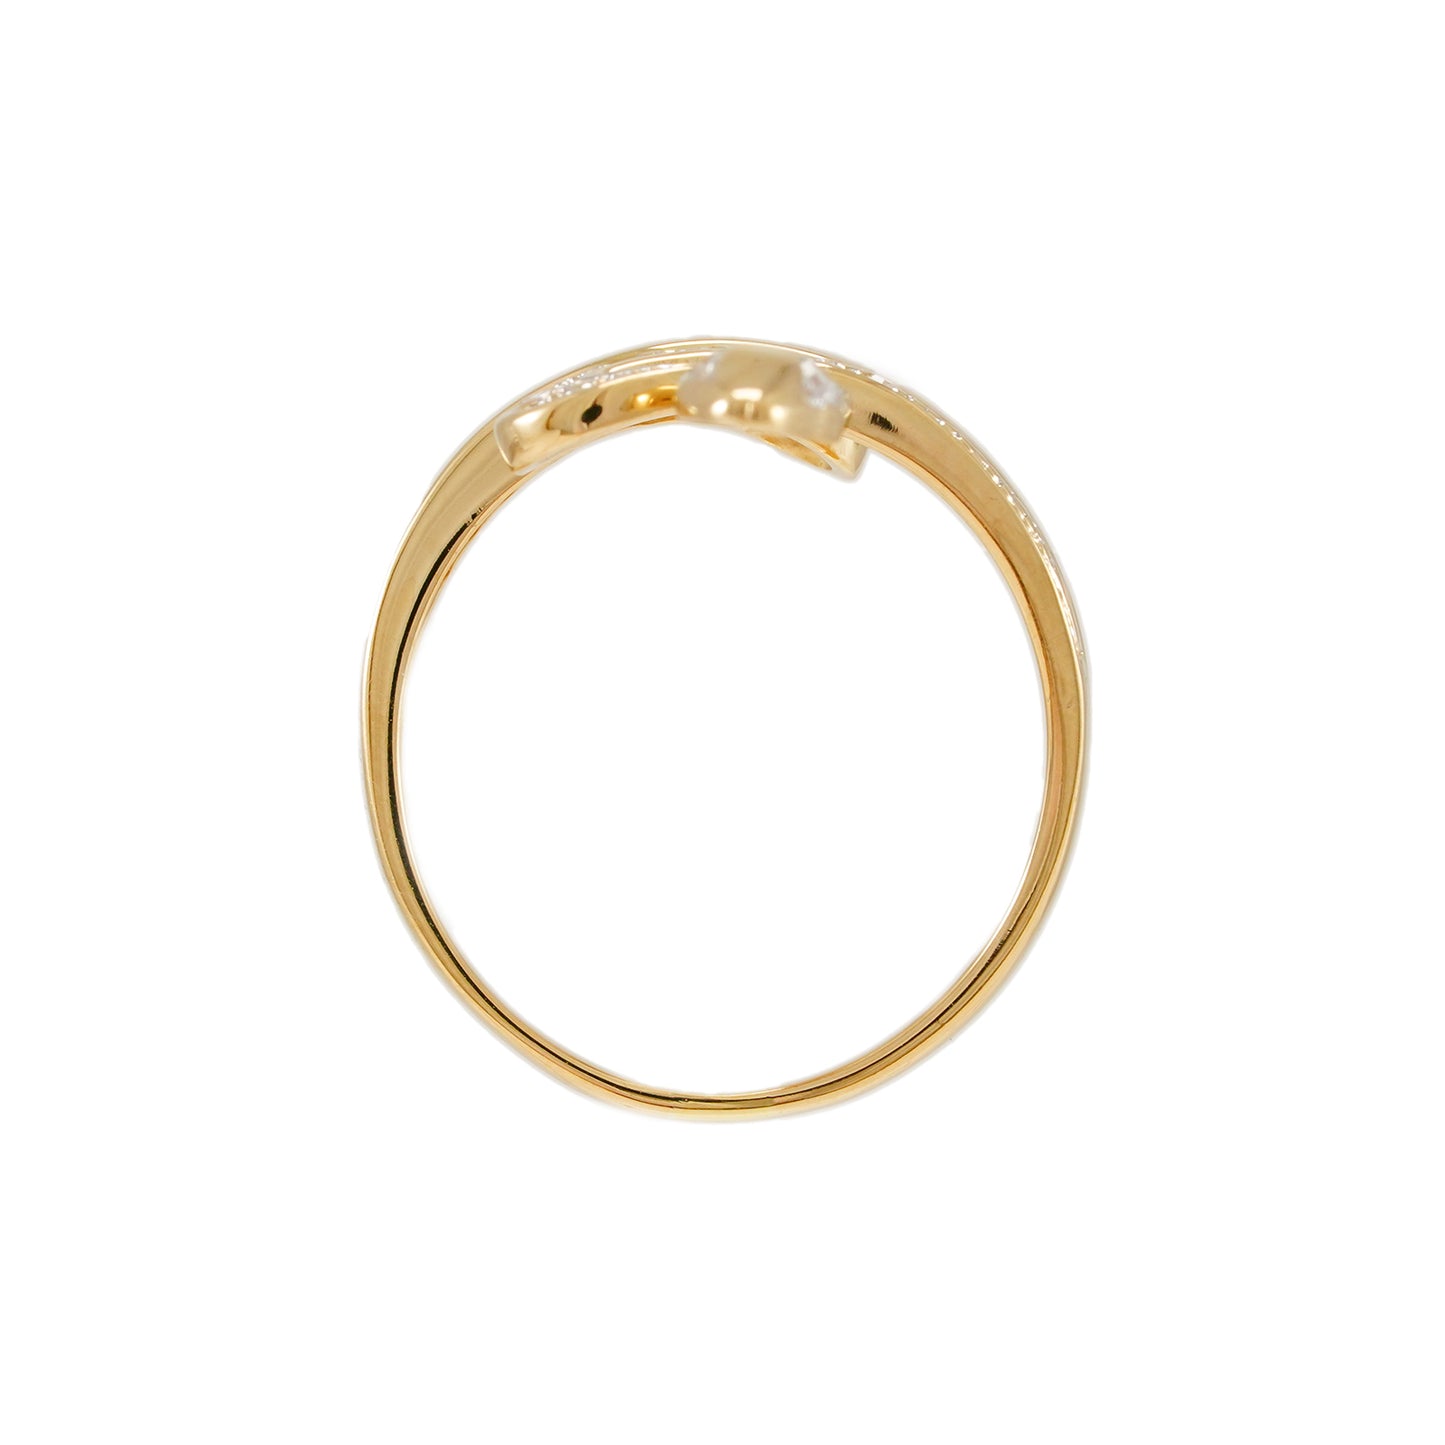 Diamond ring snake yellow gold 14K women's jewelry gold ring women's ring diamond jewelry